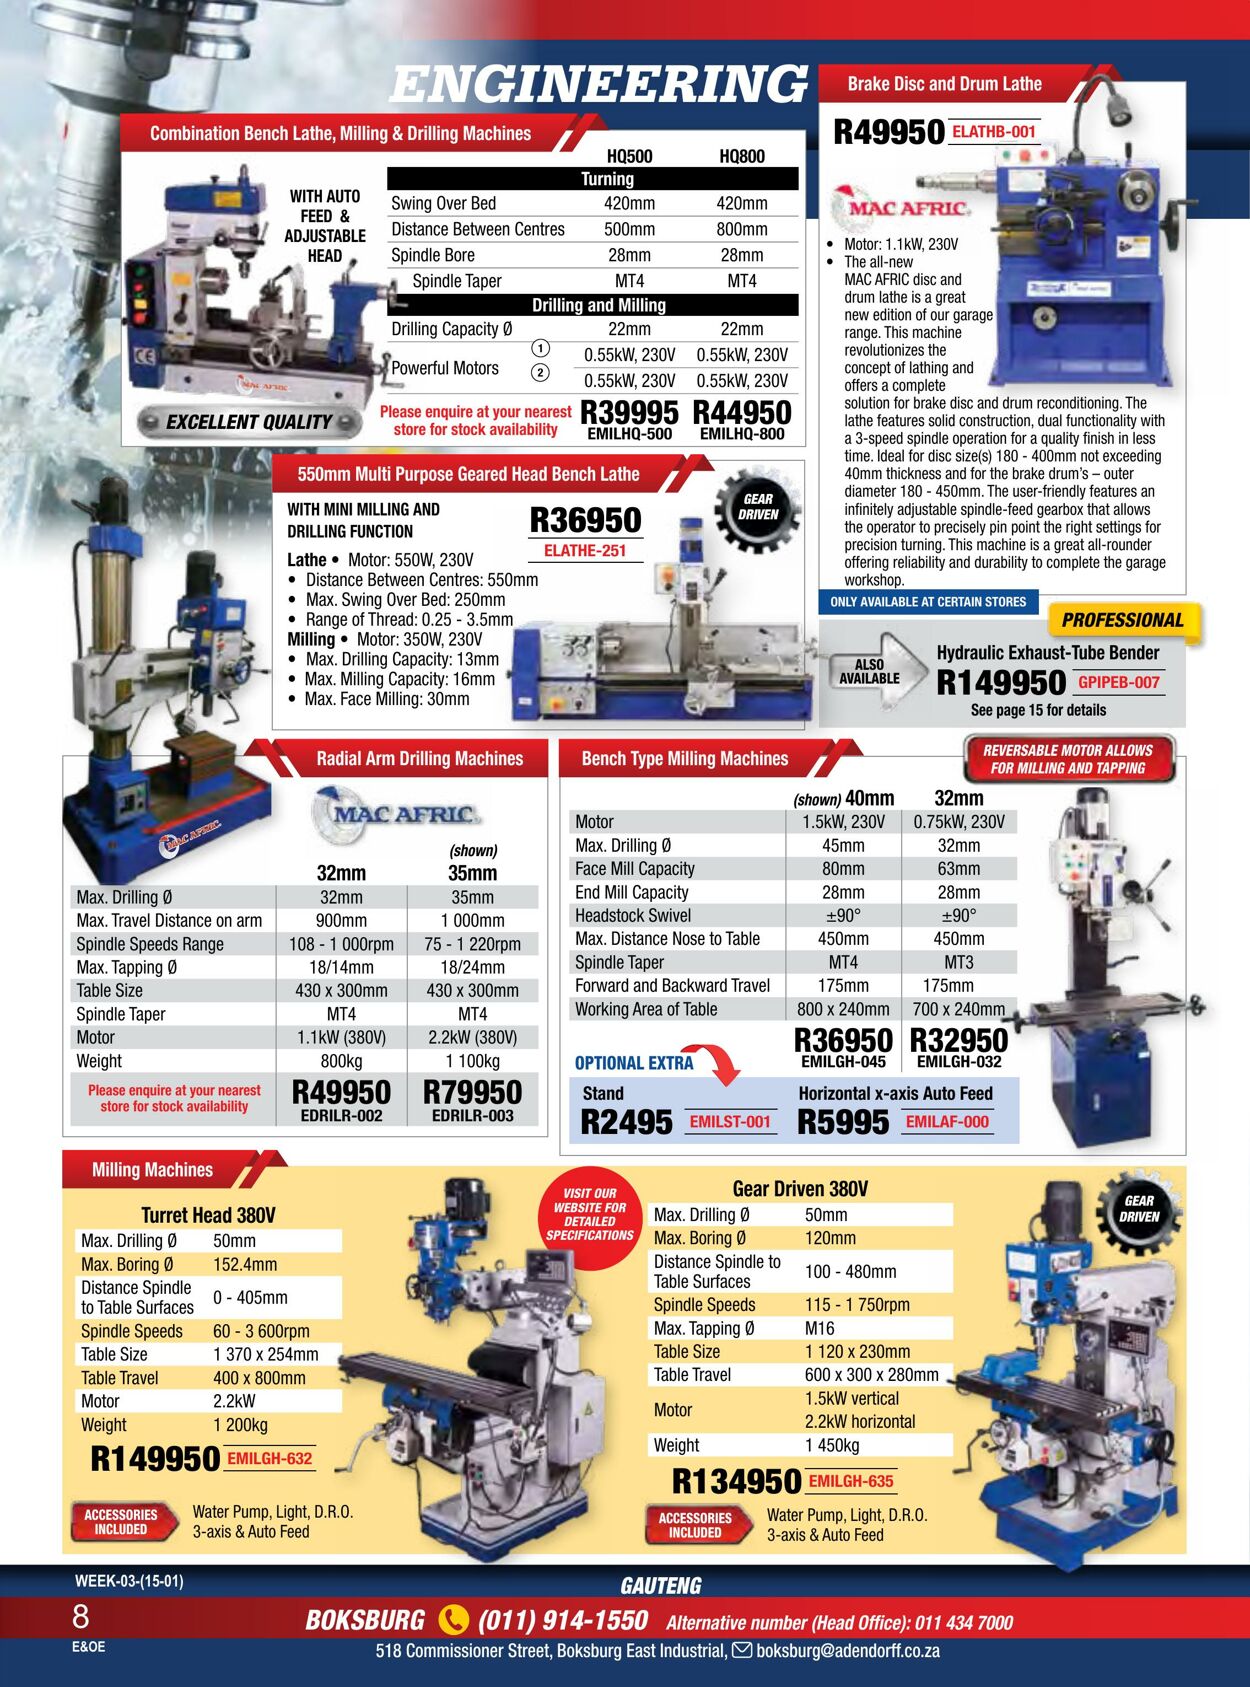 Special Adendorff Machinery Mart 15.01.2024 - 31.01.2024